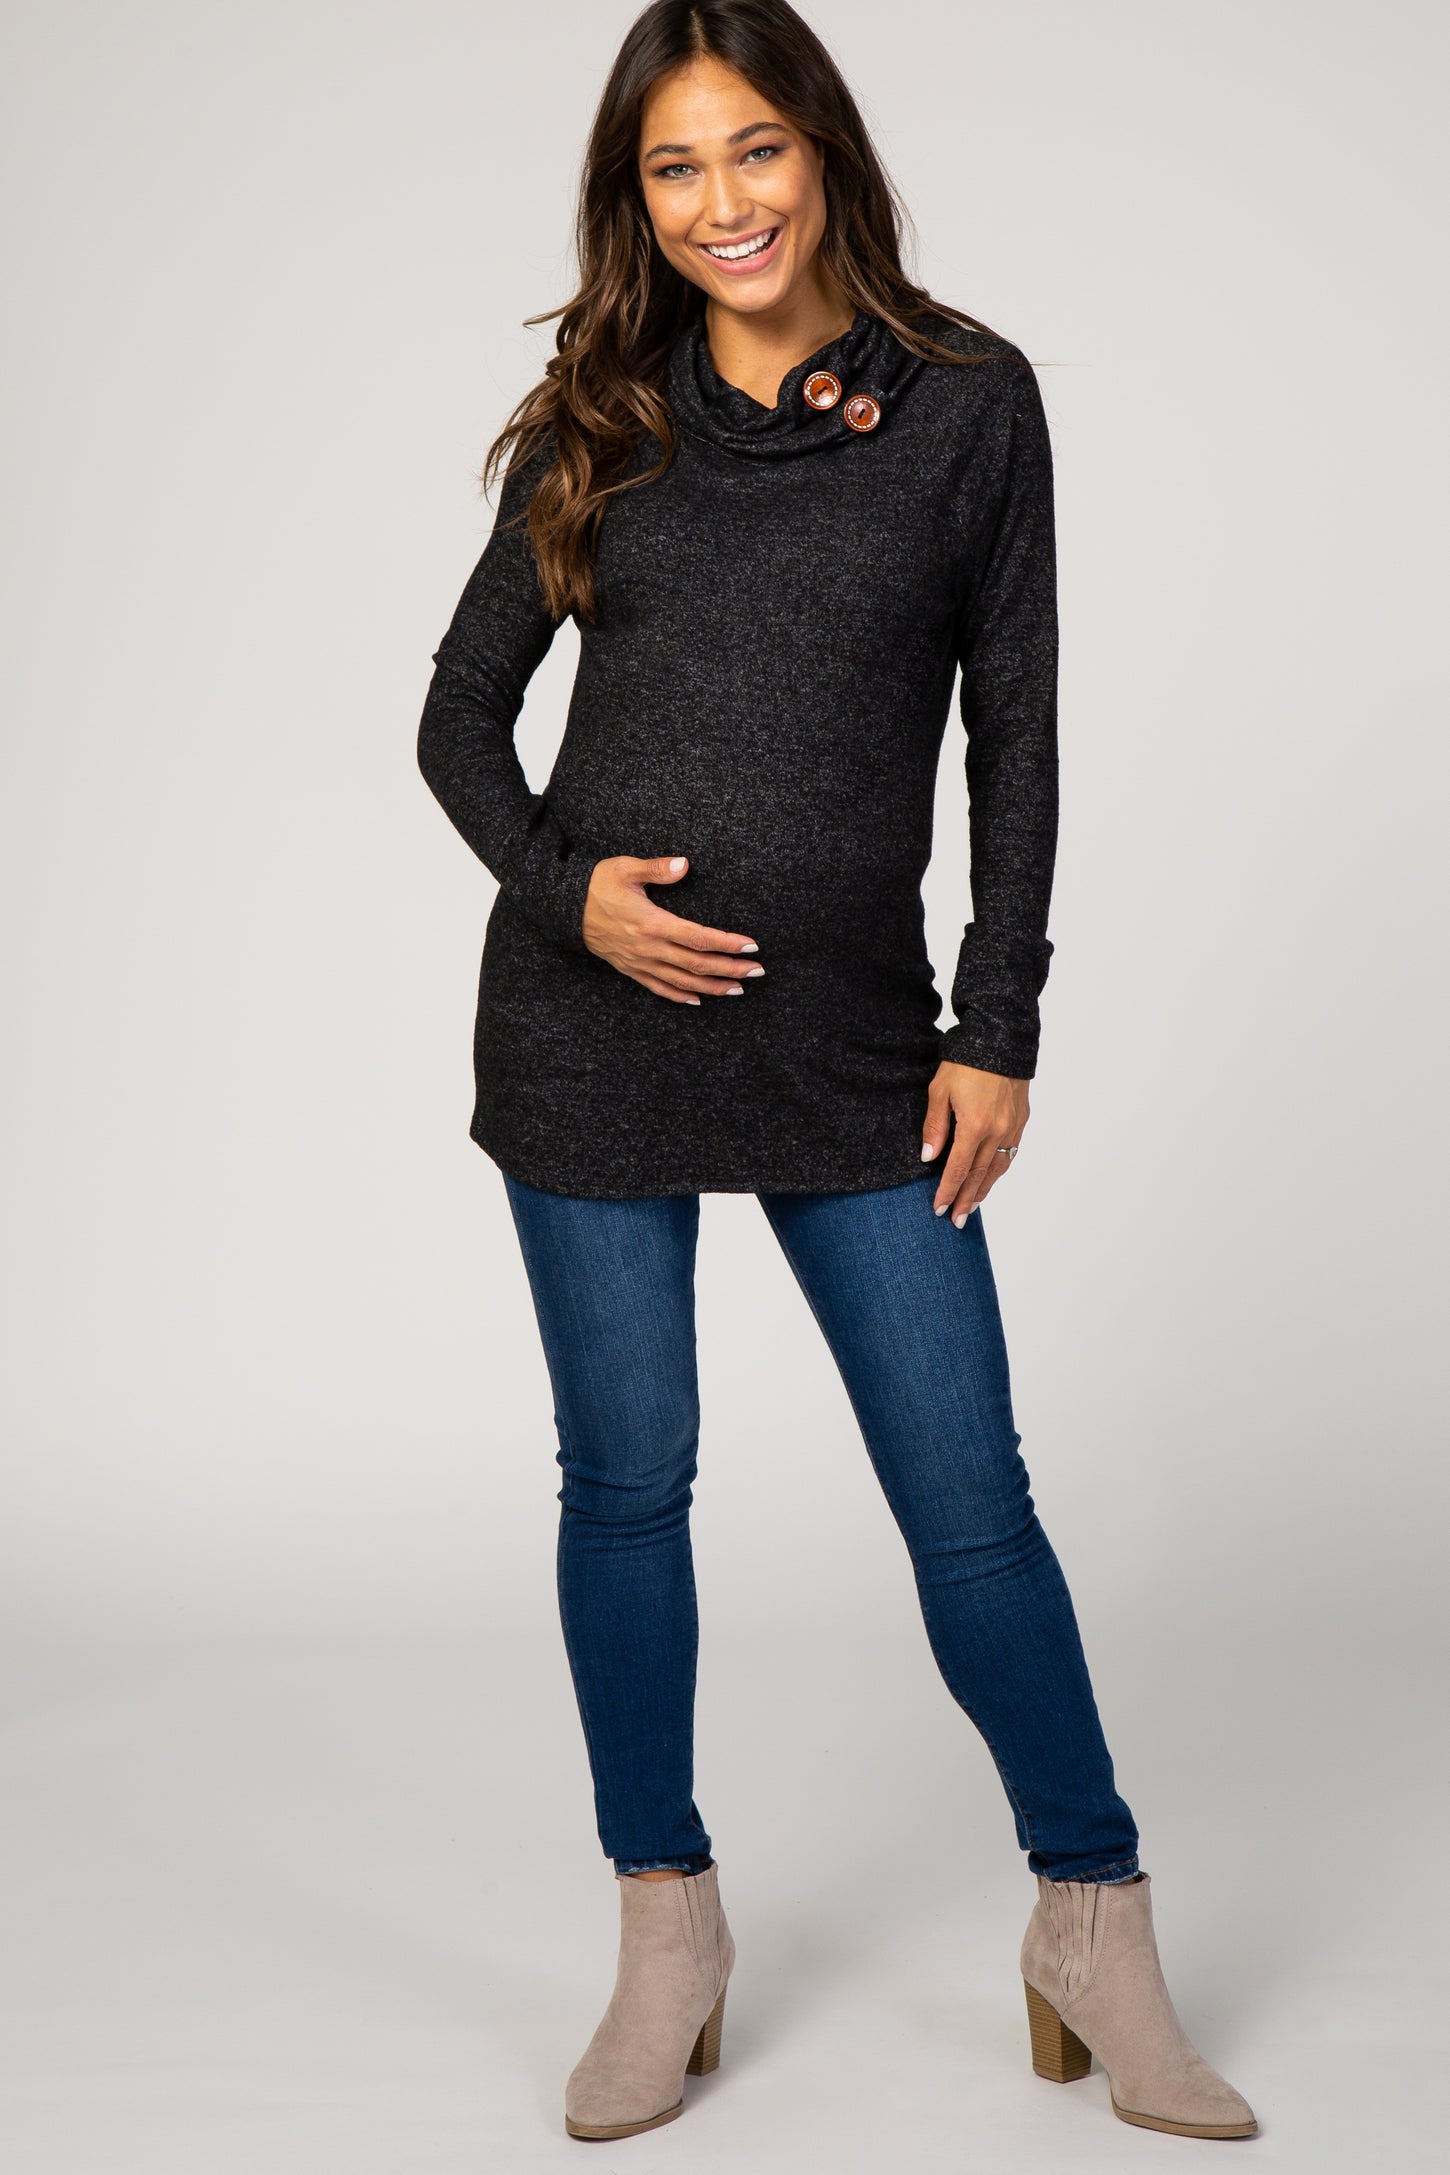 Black Heather Knit Cowl Neck Maternity Top